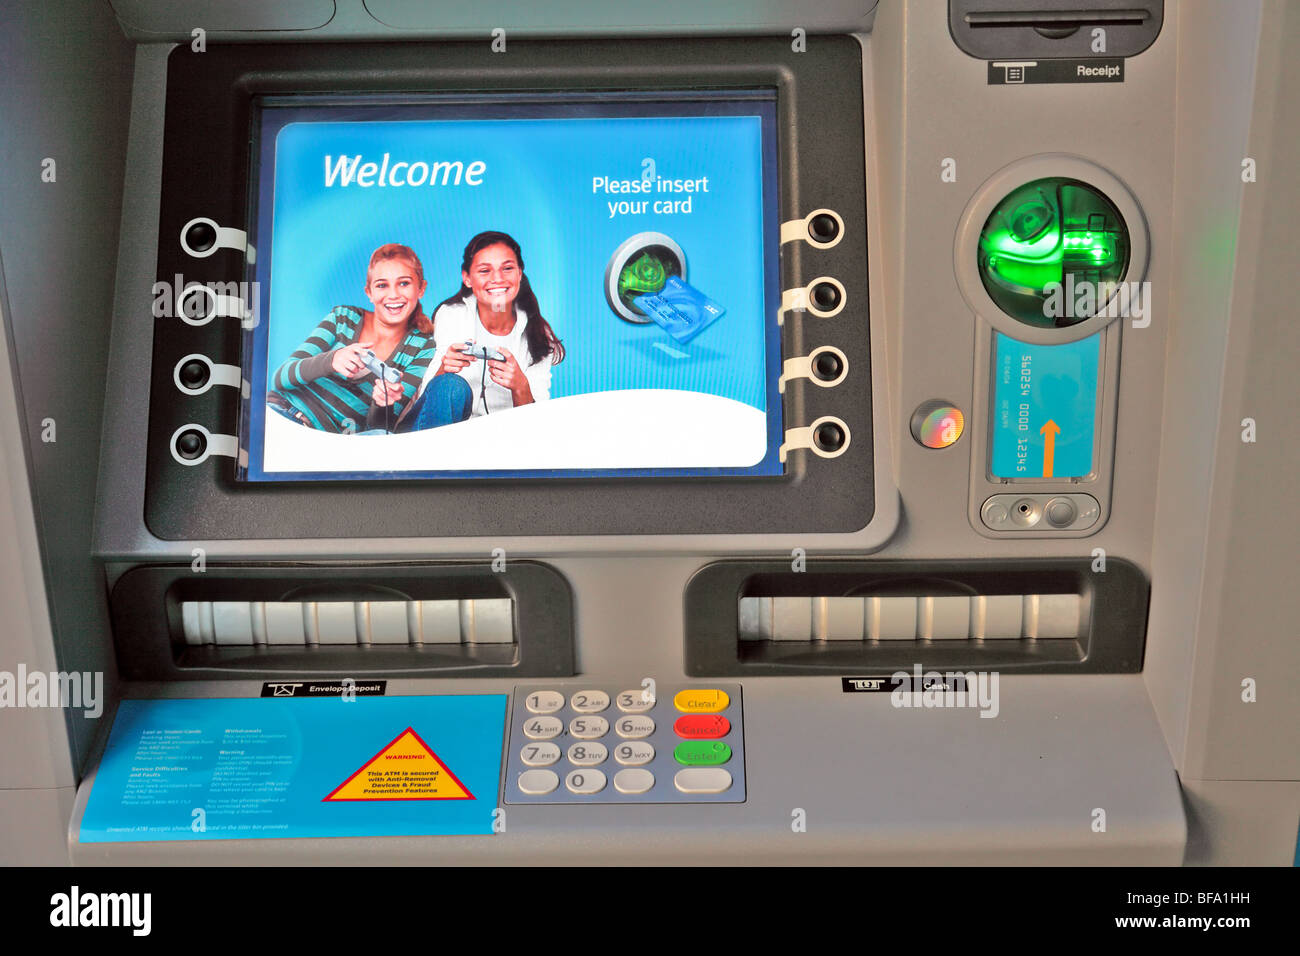 Bank ATM machine screen and keypad Stock Photo